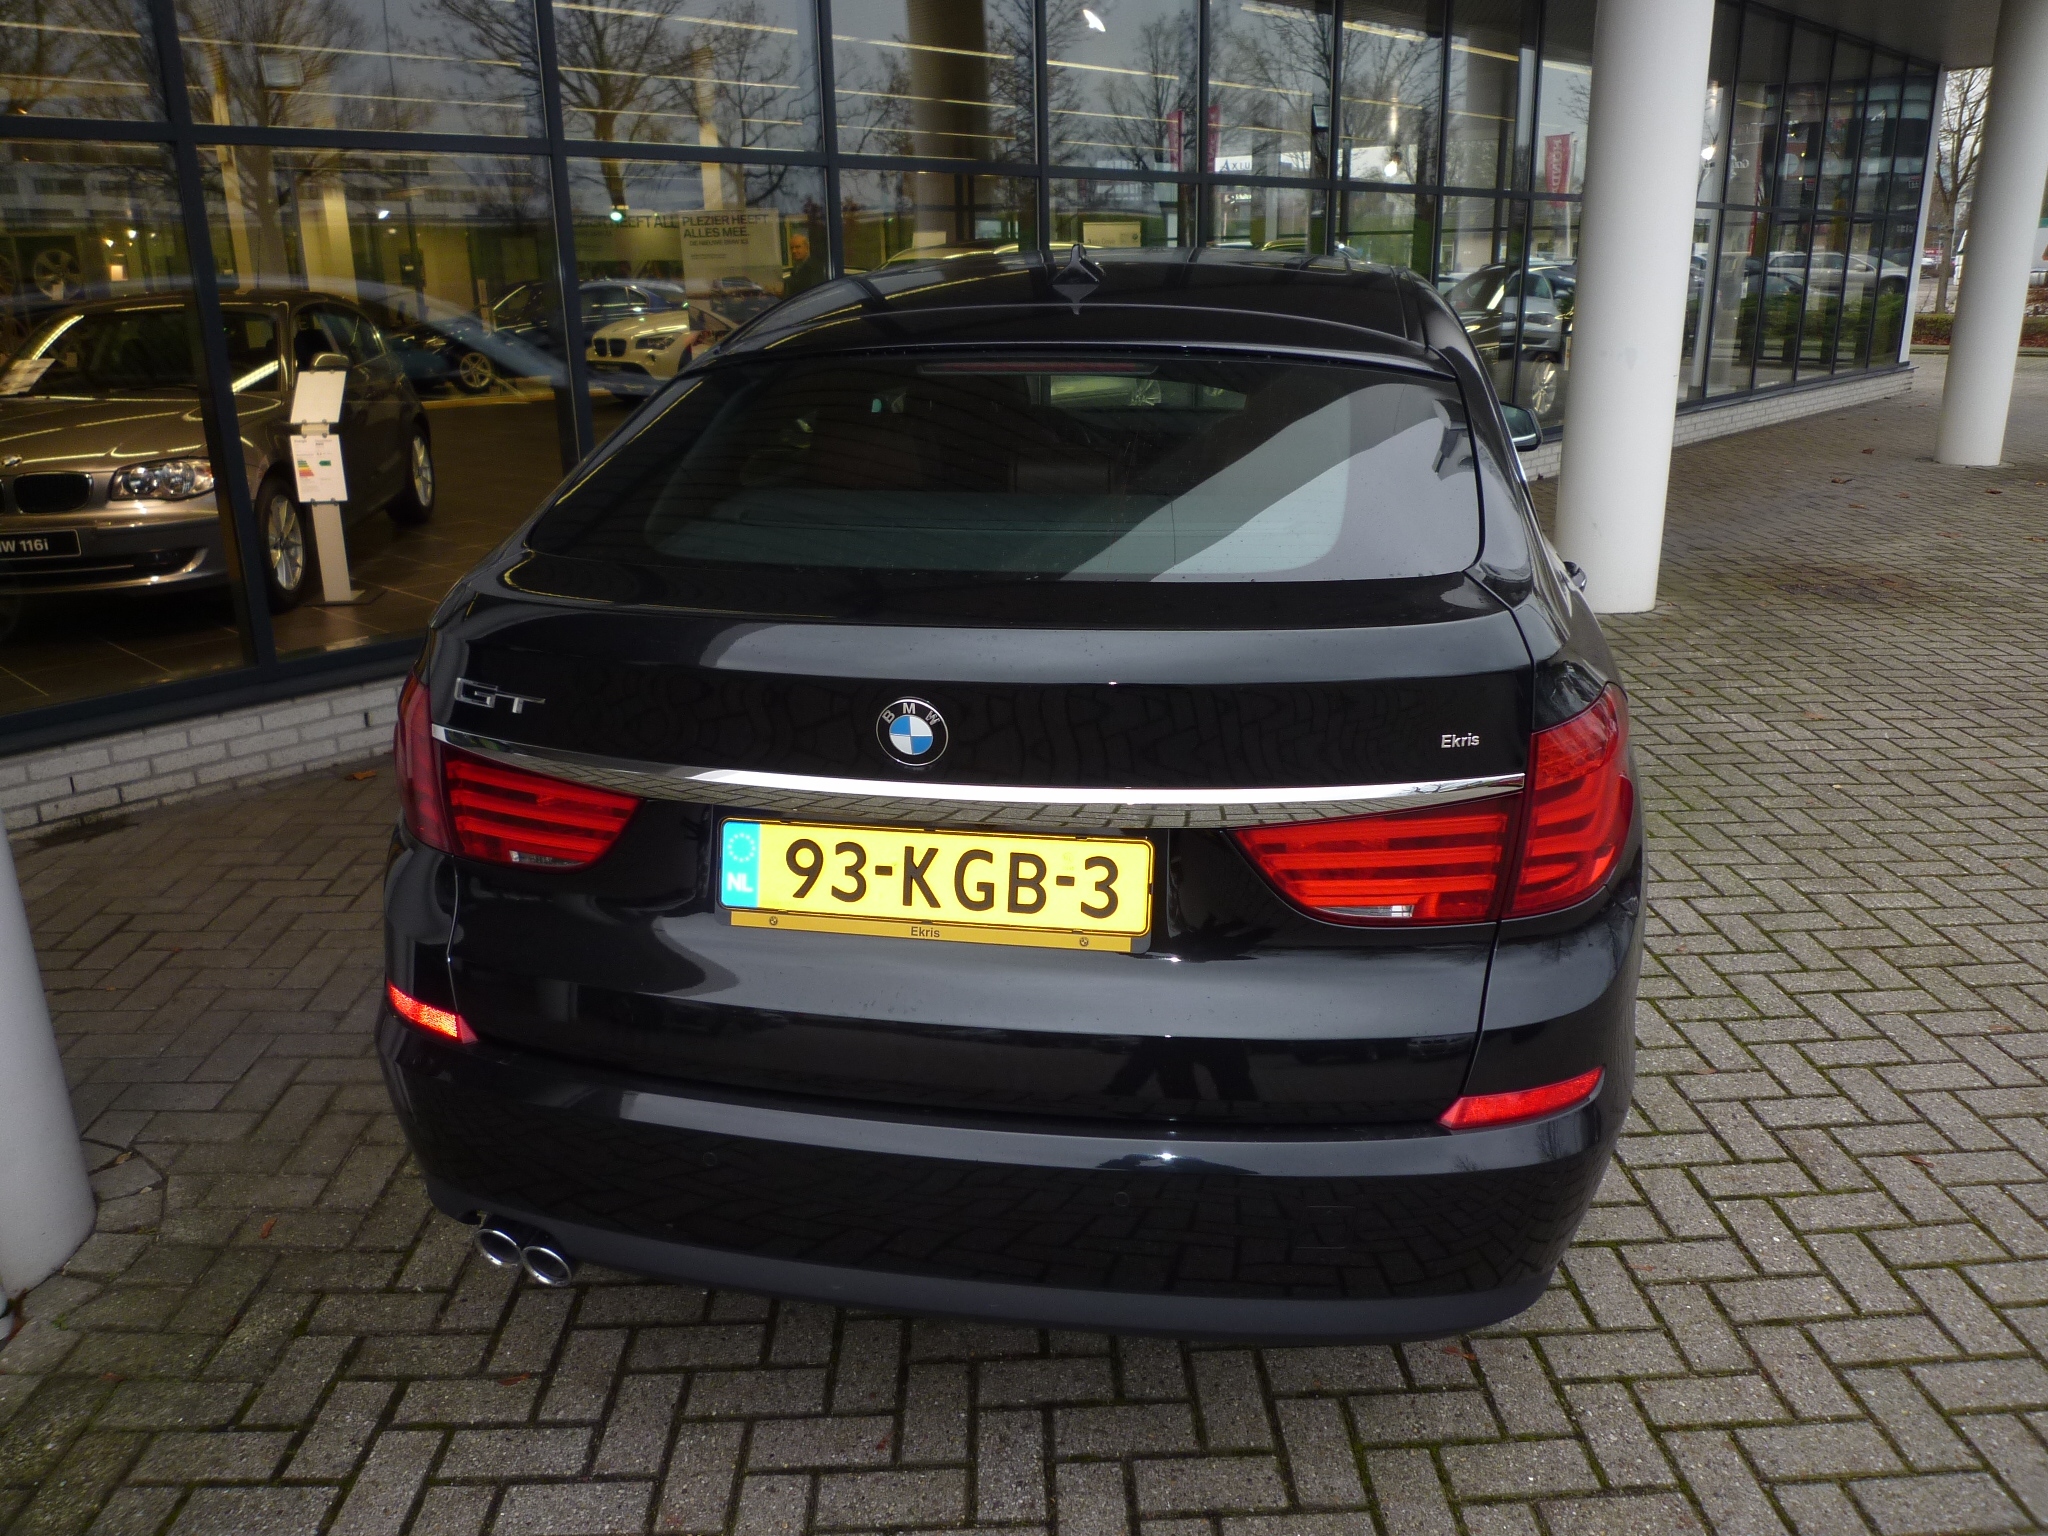 BMW GT, Ekris, Veenendaal, Holland | Flickr - Photo Sharing!